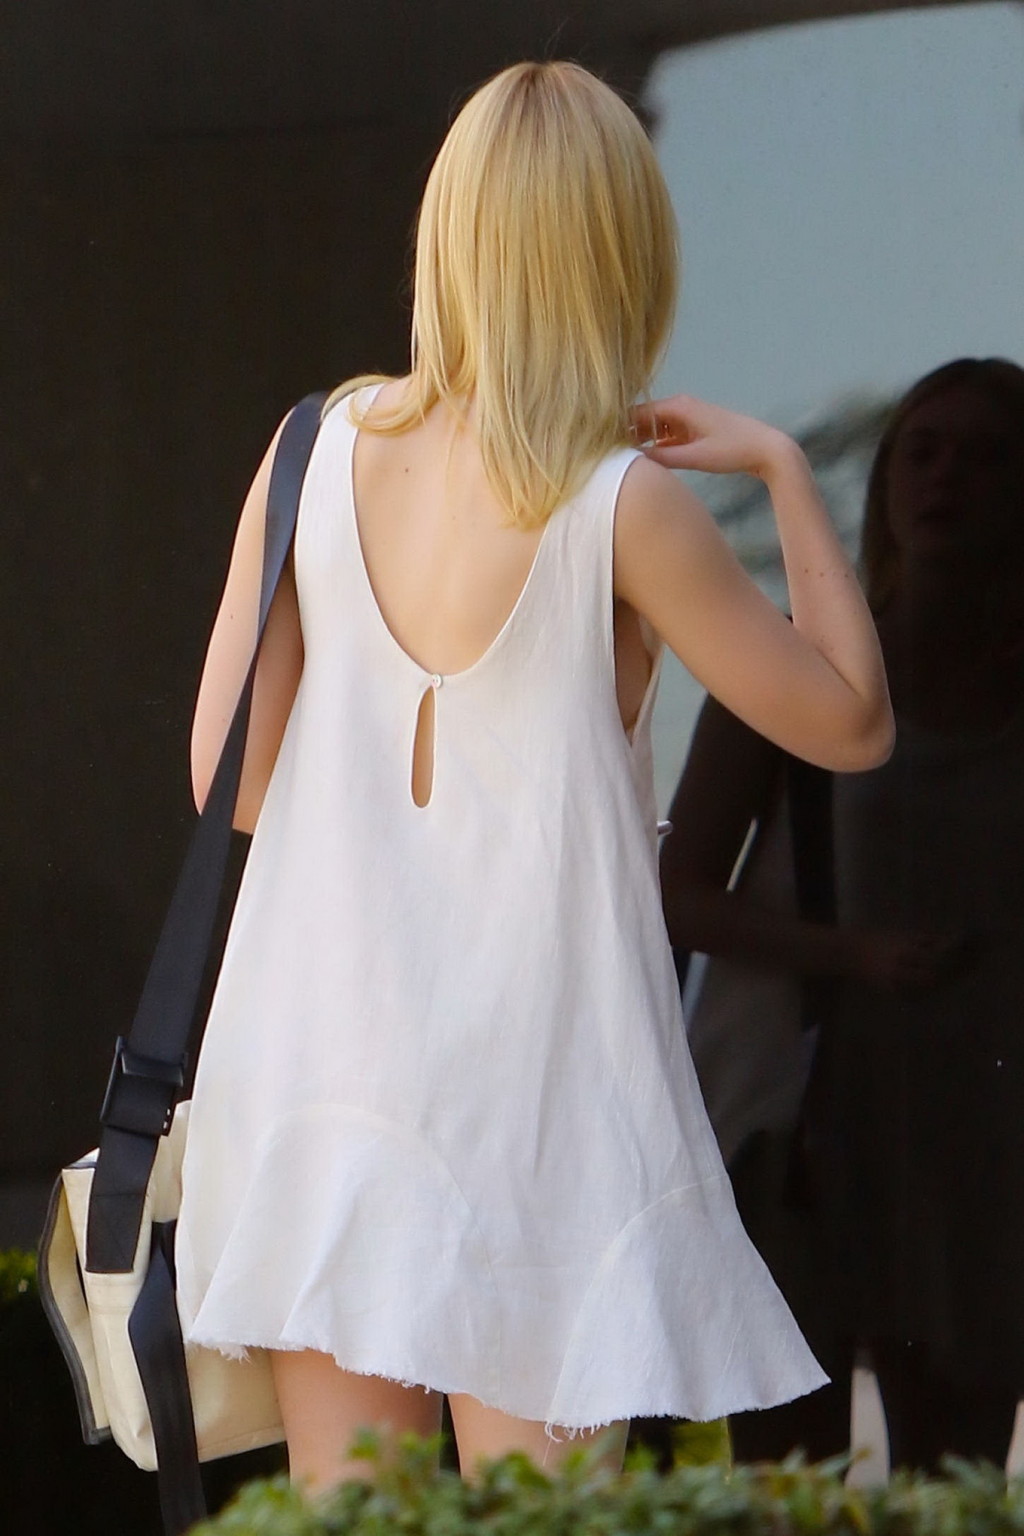 Elle Fanning shows off her bare boob in white mini dress